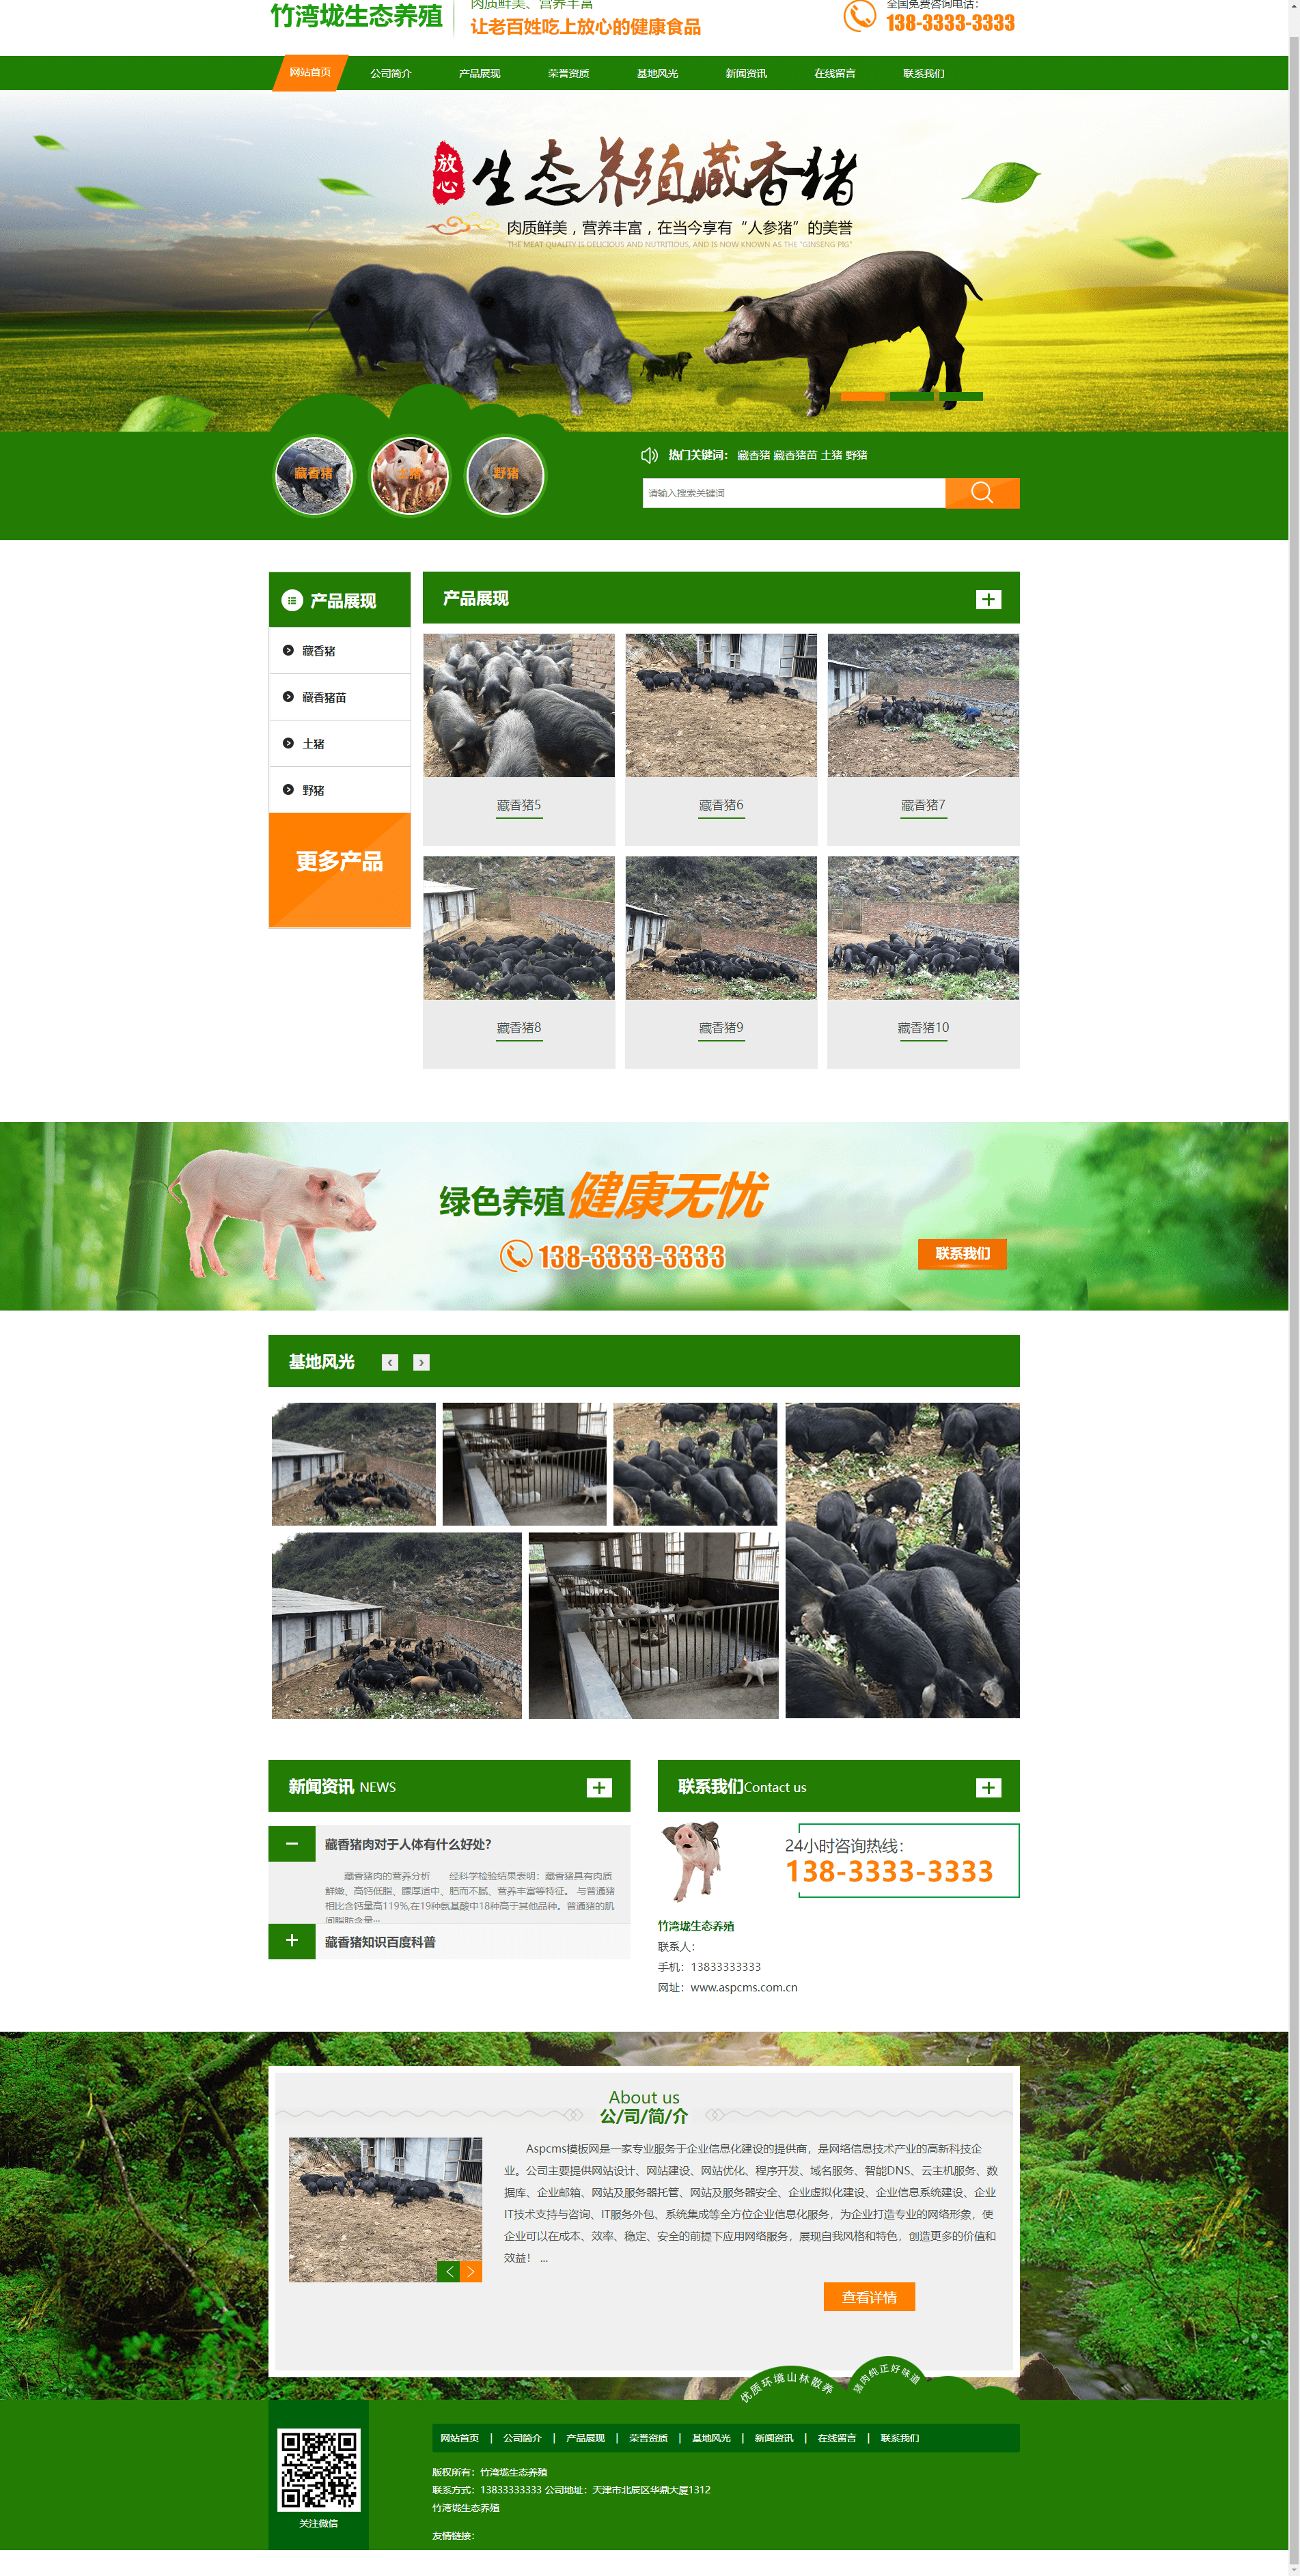 Pbootcms农业黑猪牲畜家禽畜牧养殖网站模板